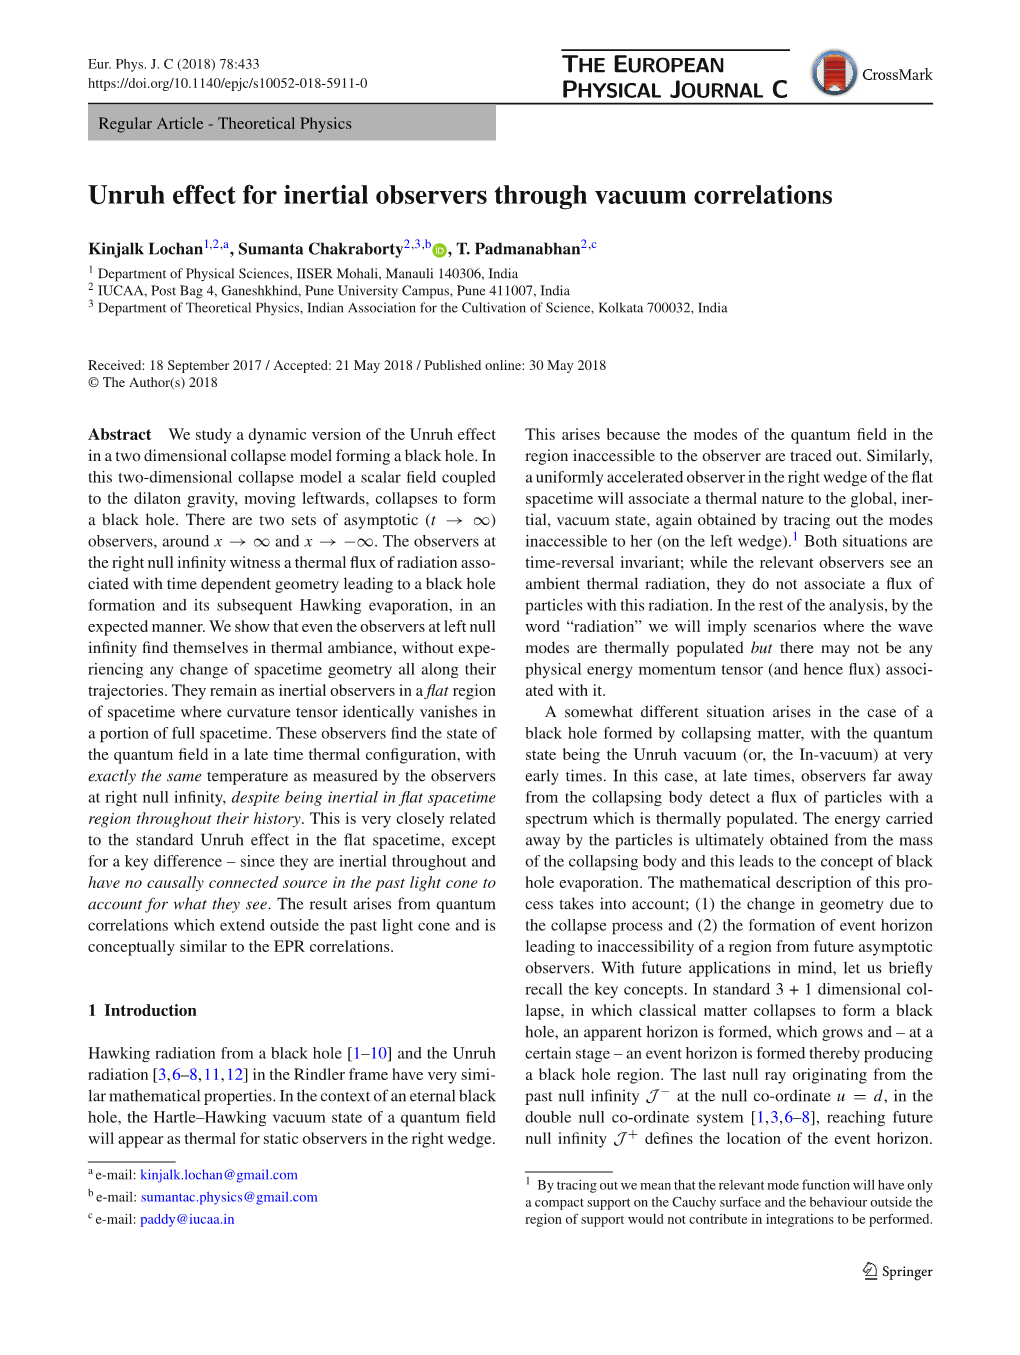 Unruh Effect for Inertial Observers Through Vacuum Correlations